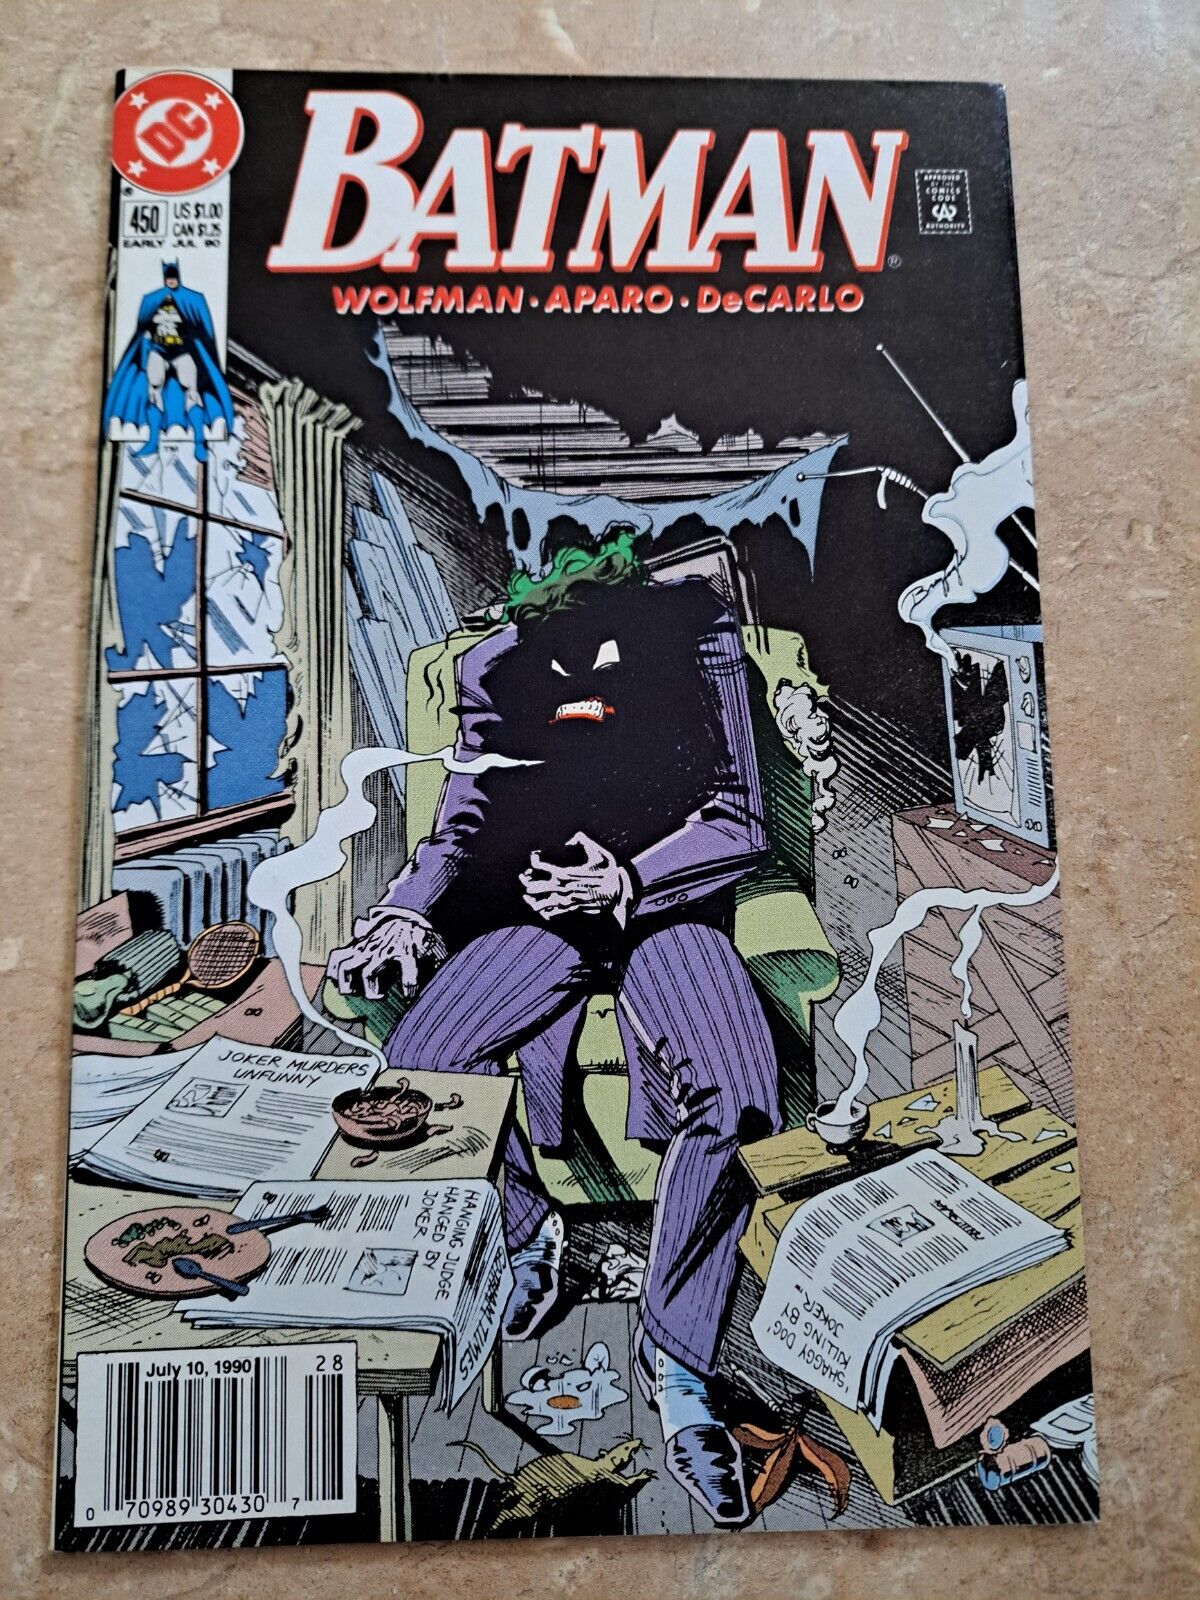 BATMAN #450  DC Comics 1990  The Joker  Wolfman Aparo DeCarlo